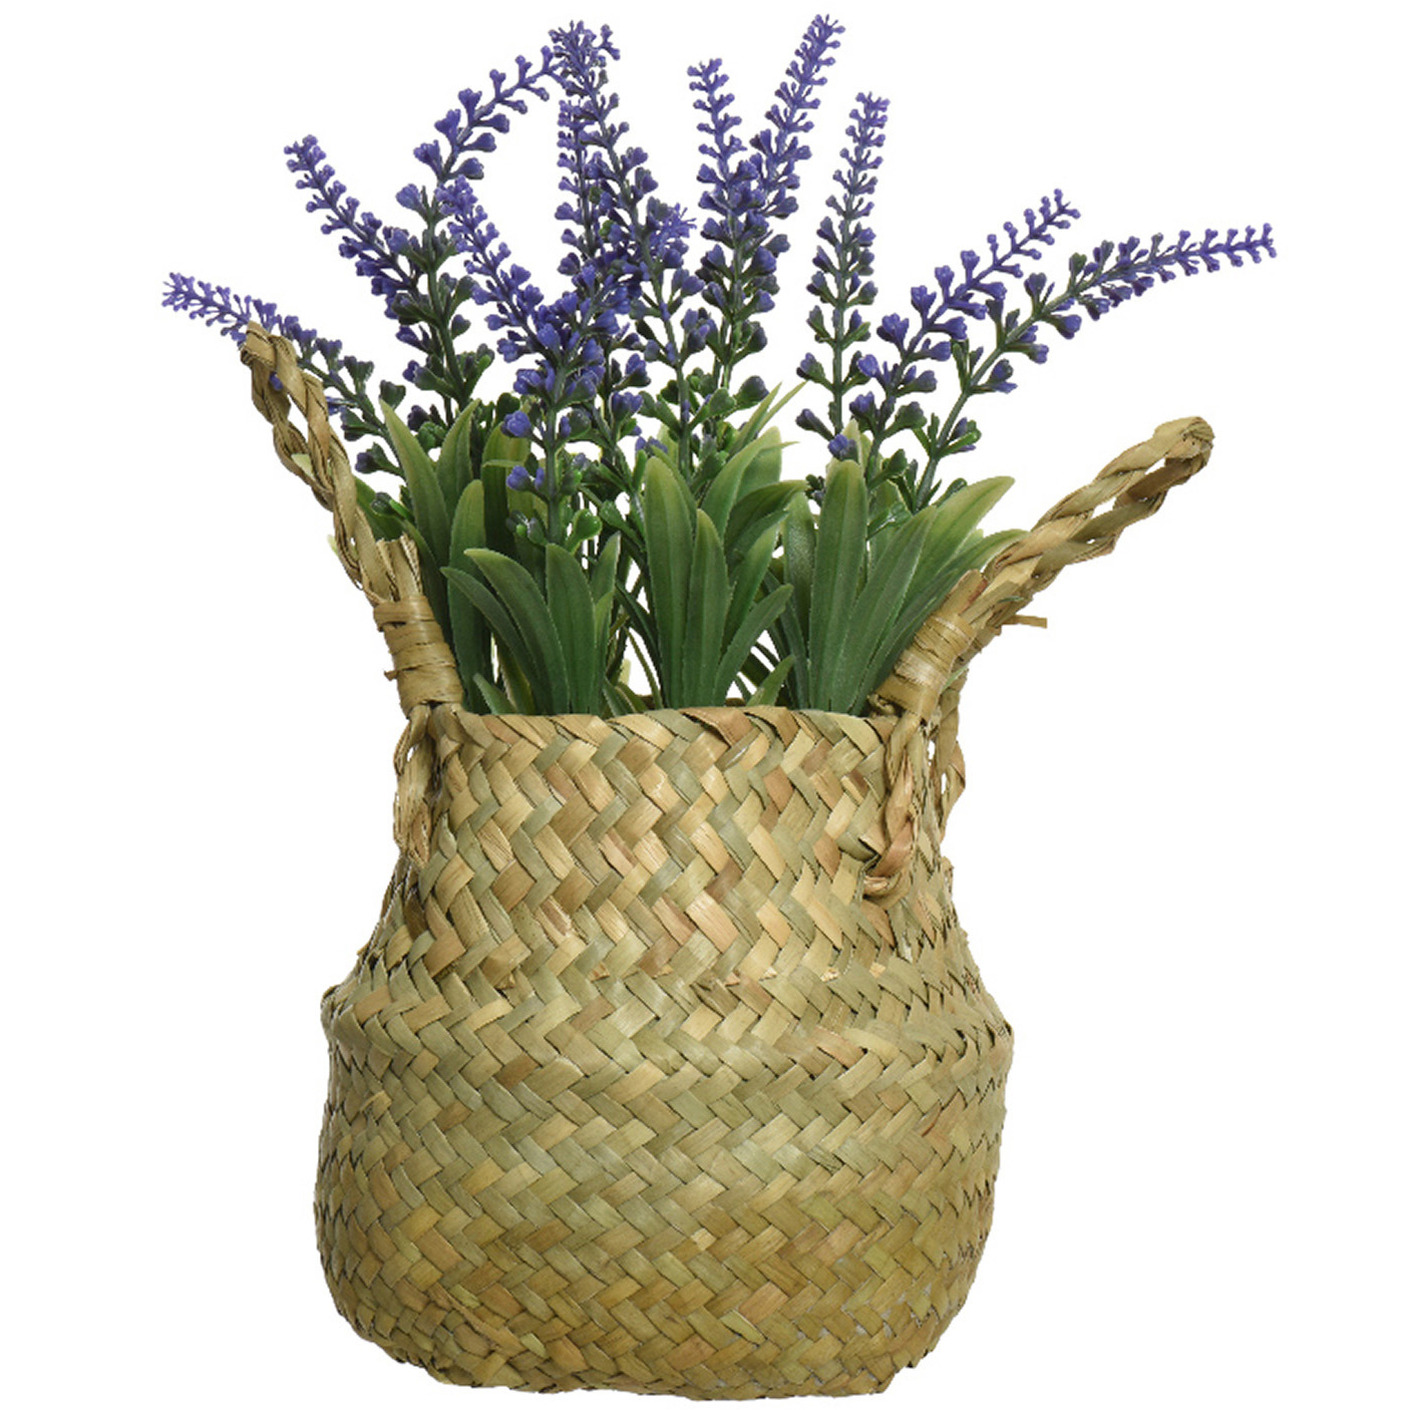 Lavendel kunstplant in rieten mand lila paars D16 x H27 cm